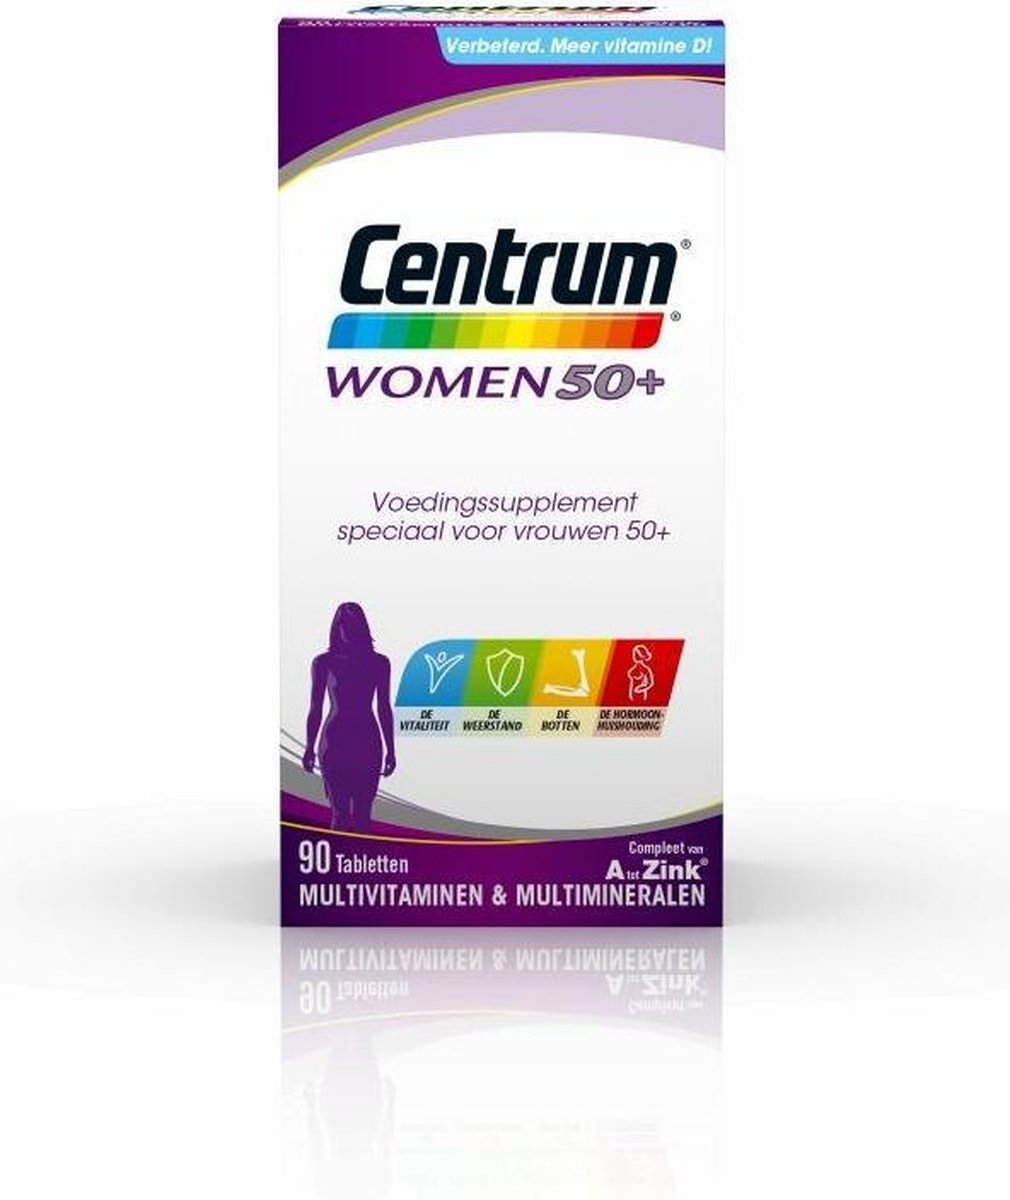 bol.com | Centrum women advanced 50+ - 90 Tabletten - Multivitaminen